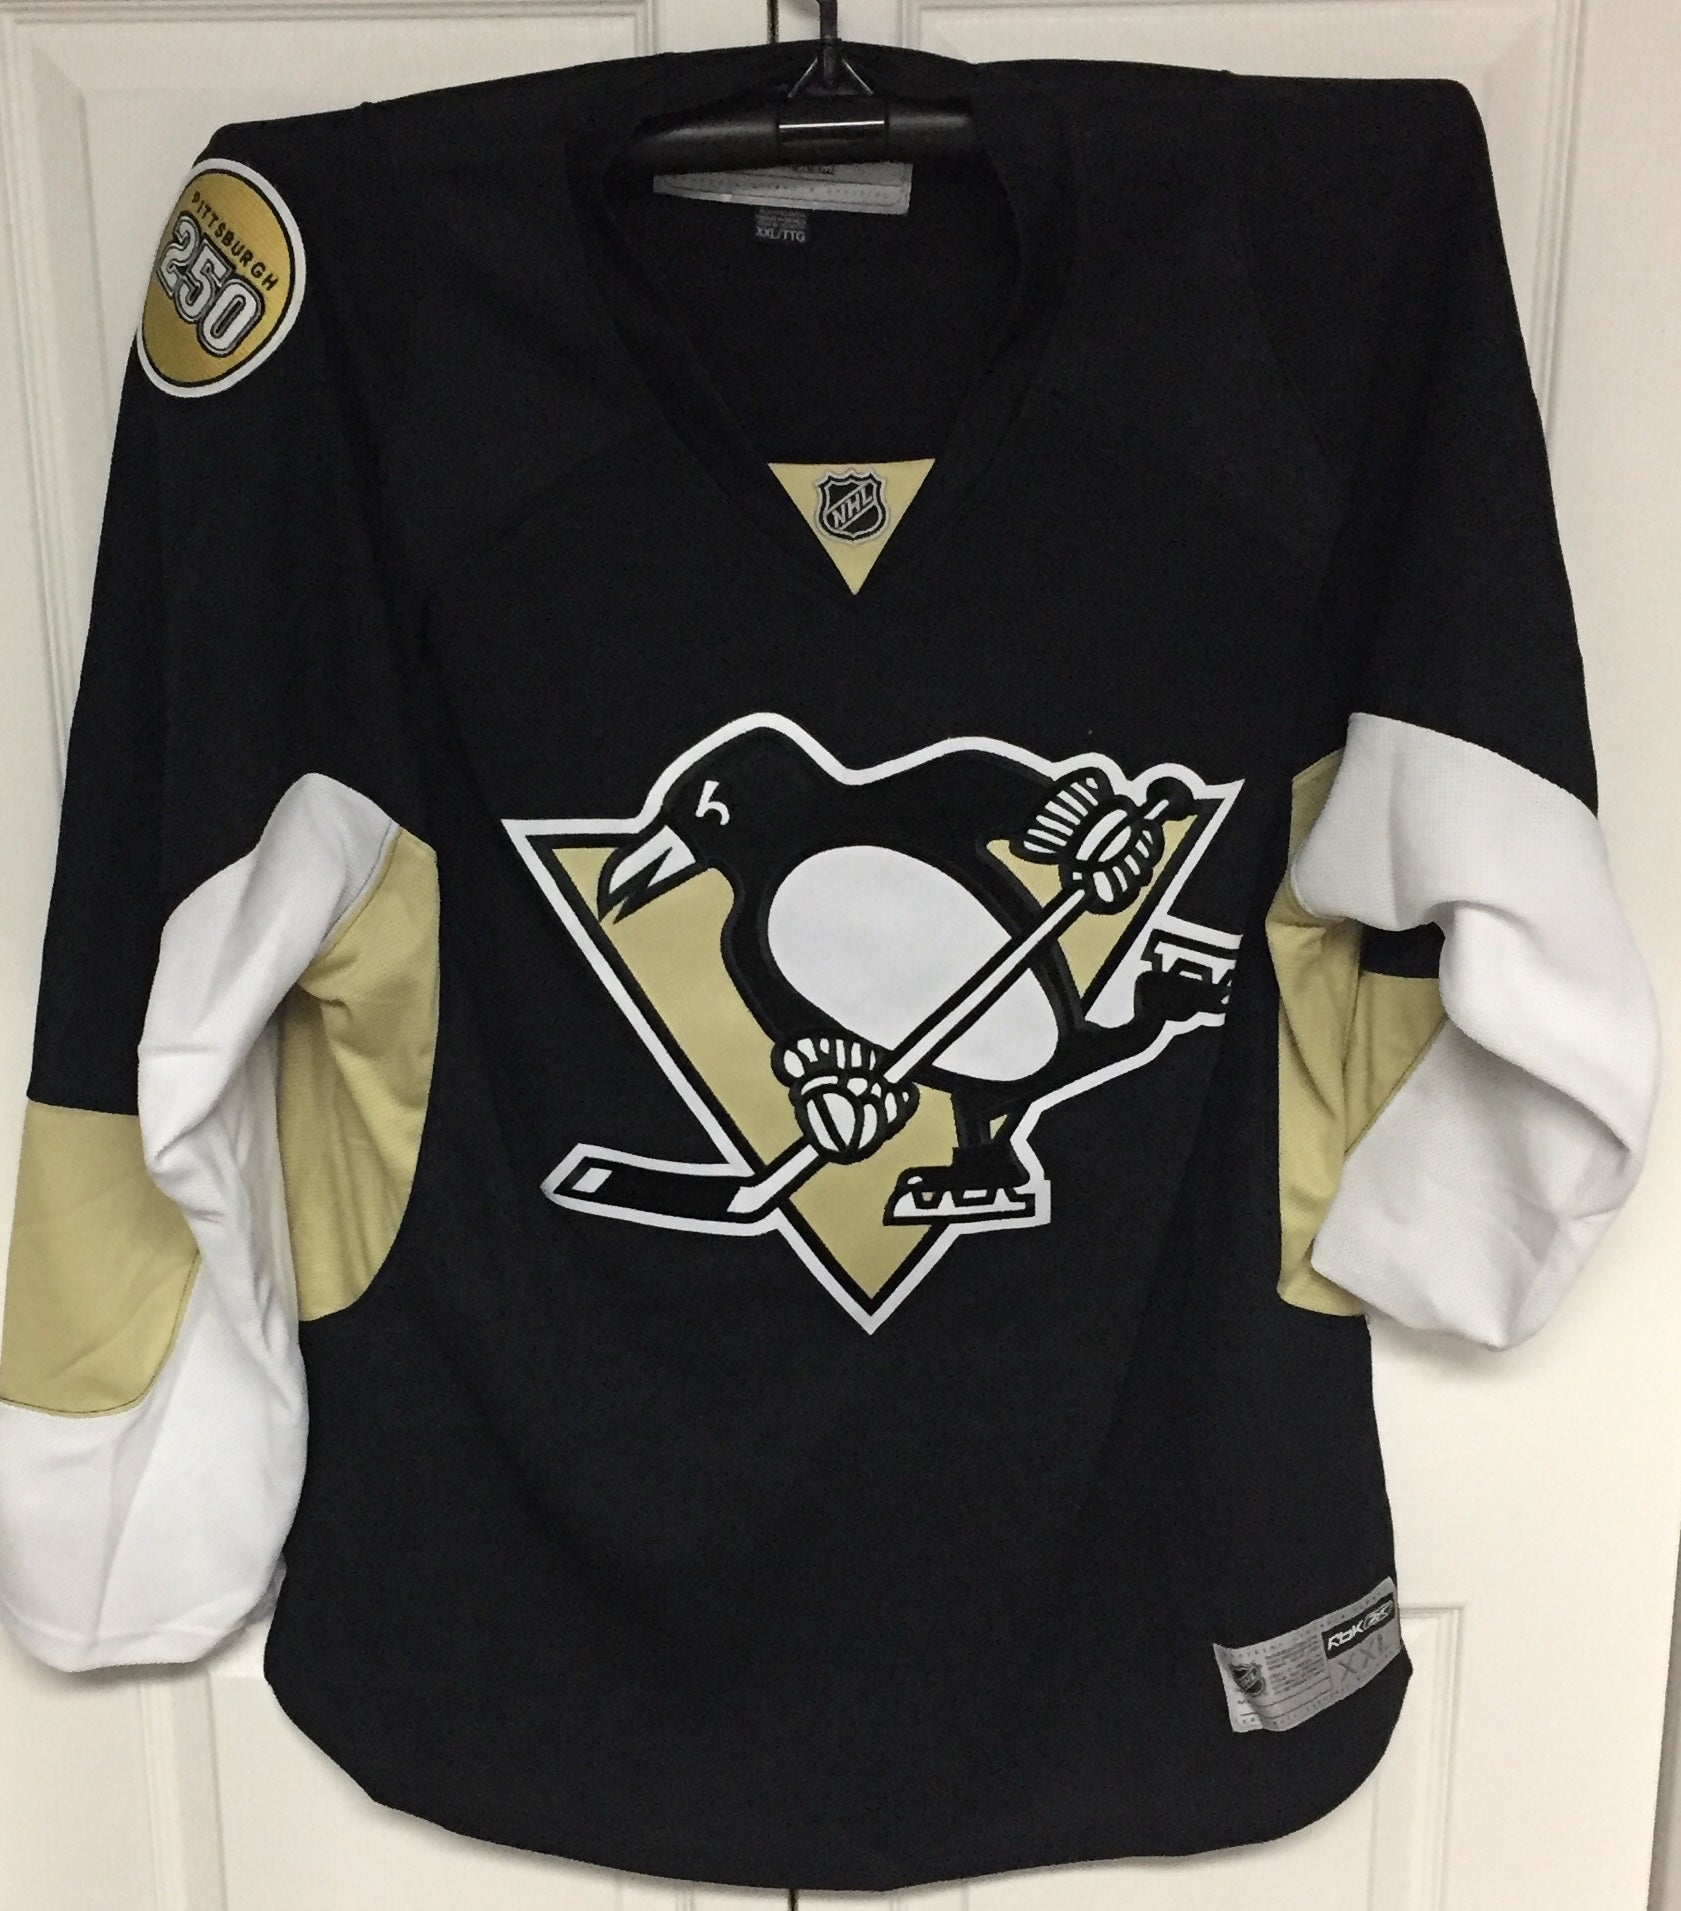 H550B-PIT745B Pittsburgh Penguins Blank Jerseys